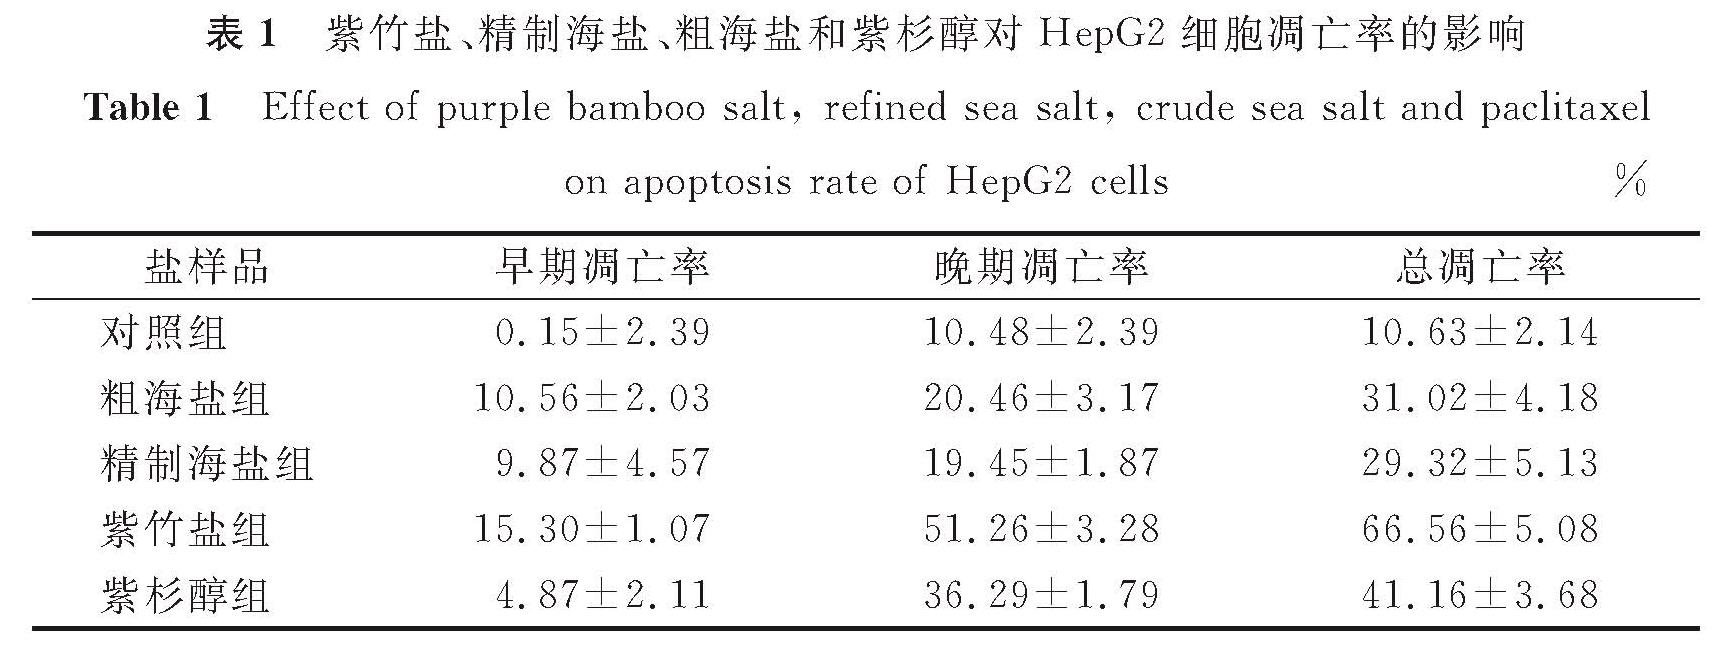 表1 紫竹盐、精制海盐、粗海盐和紫杉醇对HepG2细胞凋亡率的影响<br/>Table 1 Effect of purple bamboo salt, refined sea salt, crude sea salt and paclitaxel on apoptosis rate of HepG2 cells%